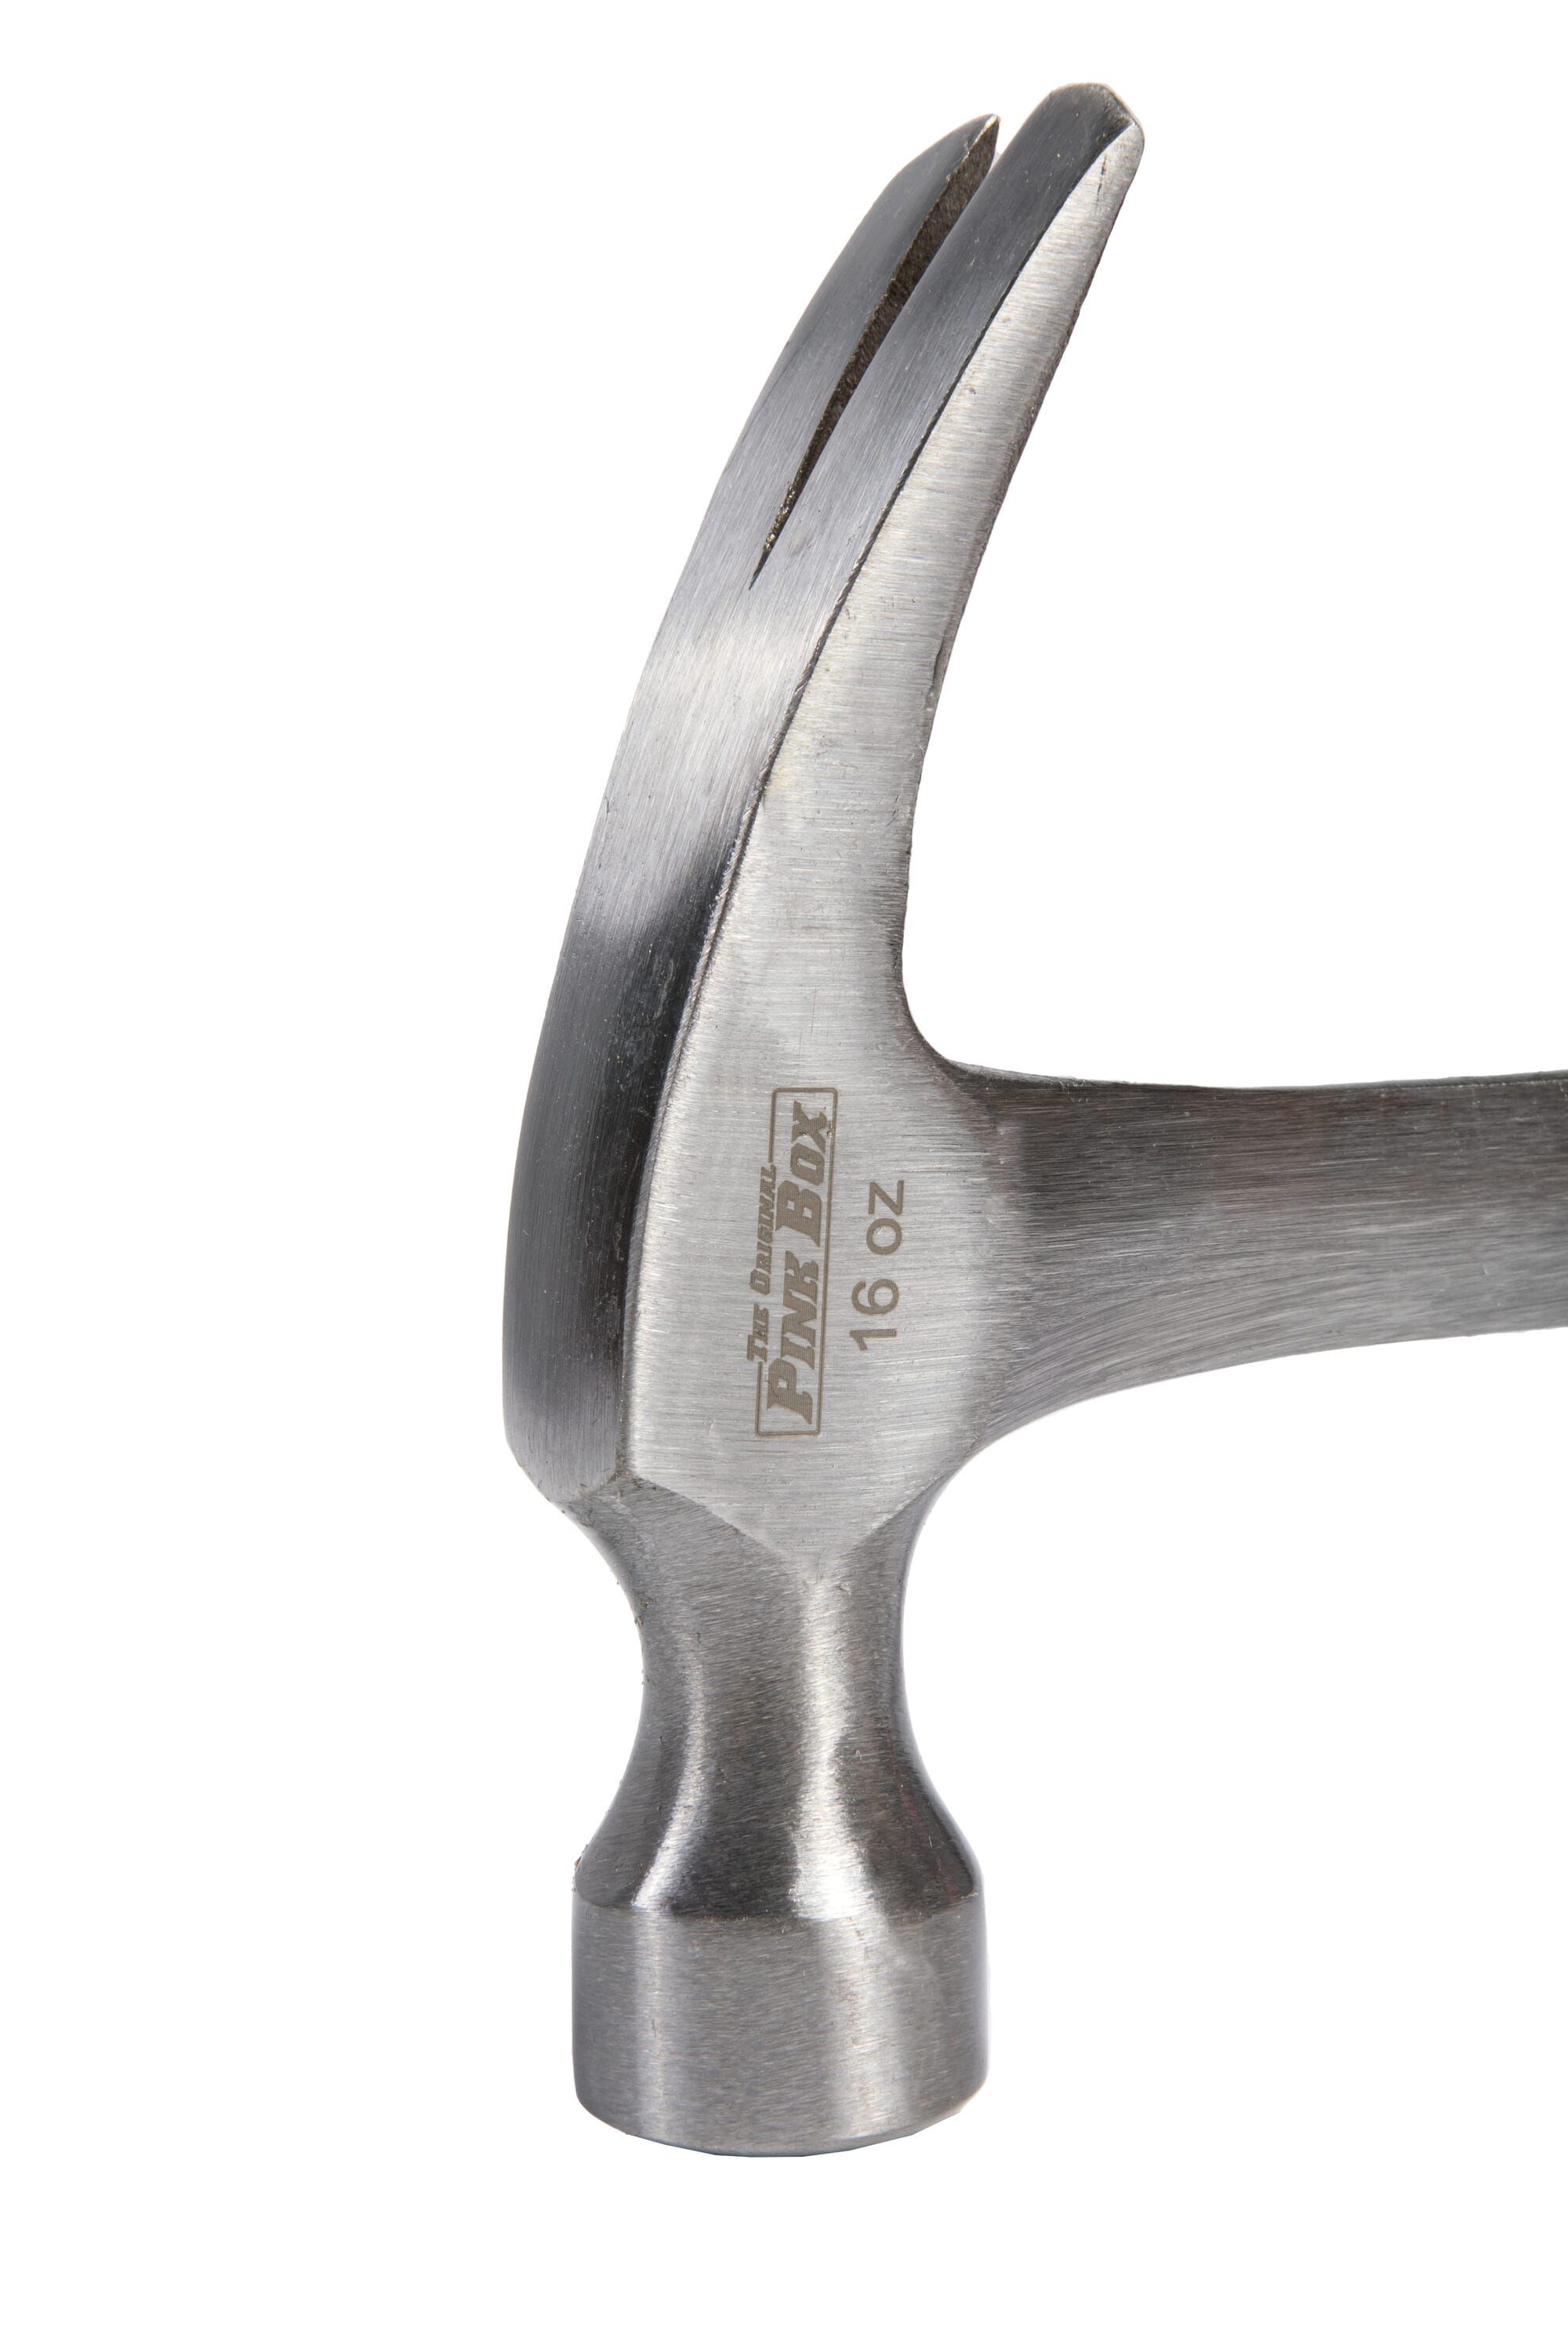 Stanley 14-oz Smooth Face Steel Head Steel Framing Hammer at